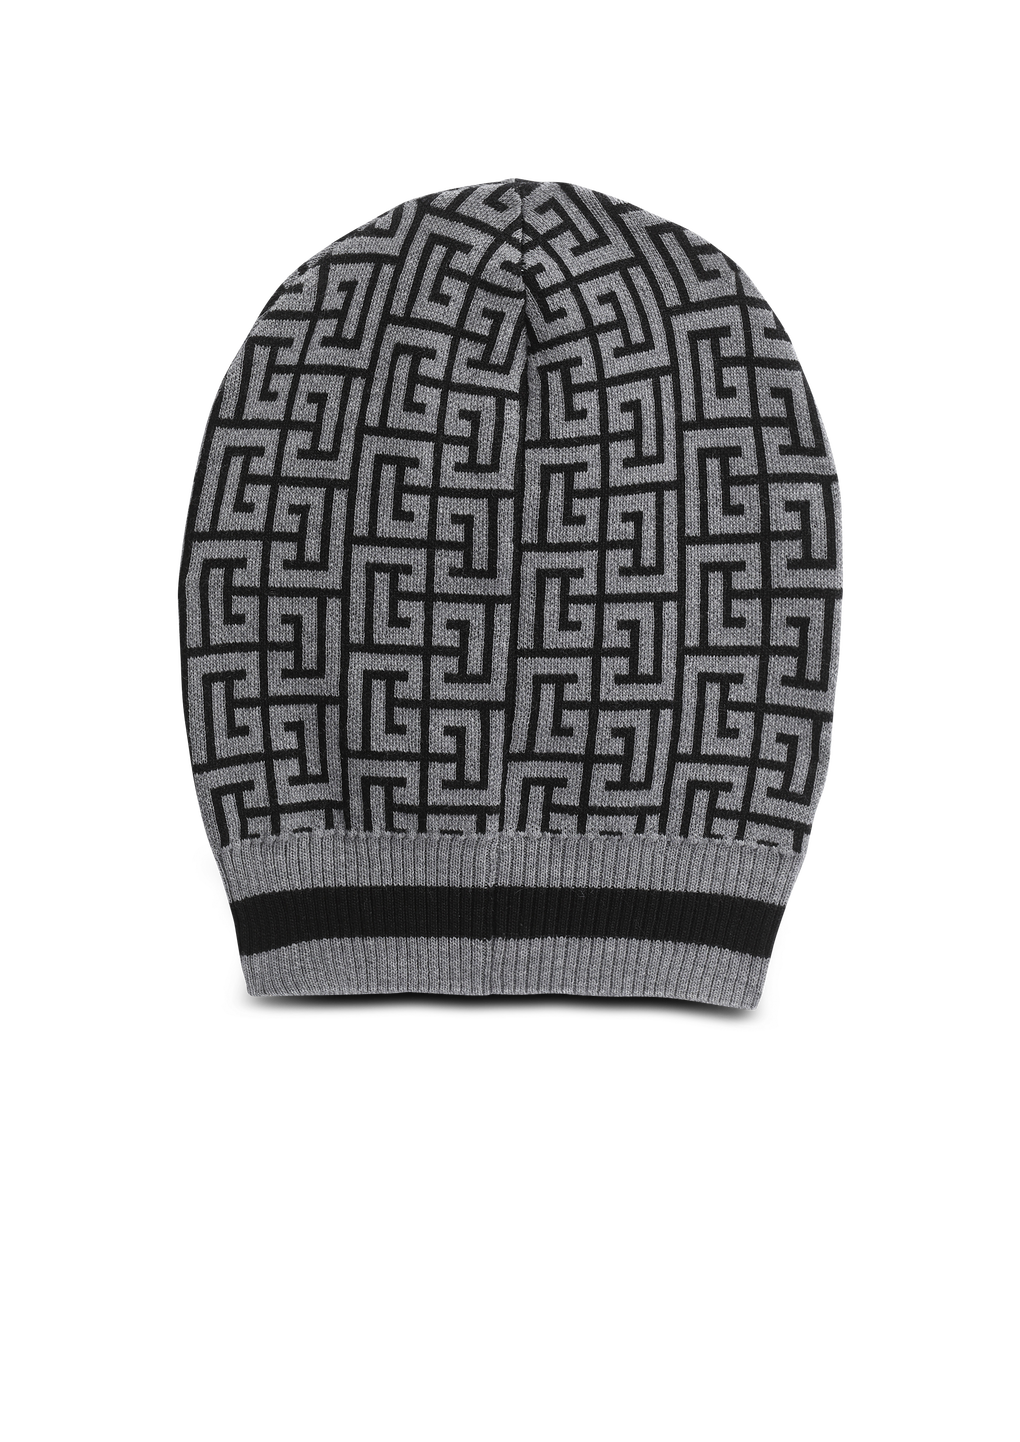 Balmain monogram embroidered wool hat, grey, hi-res